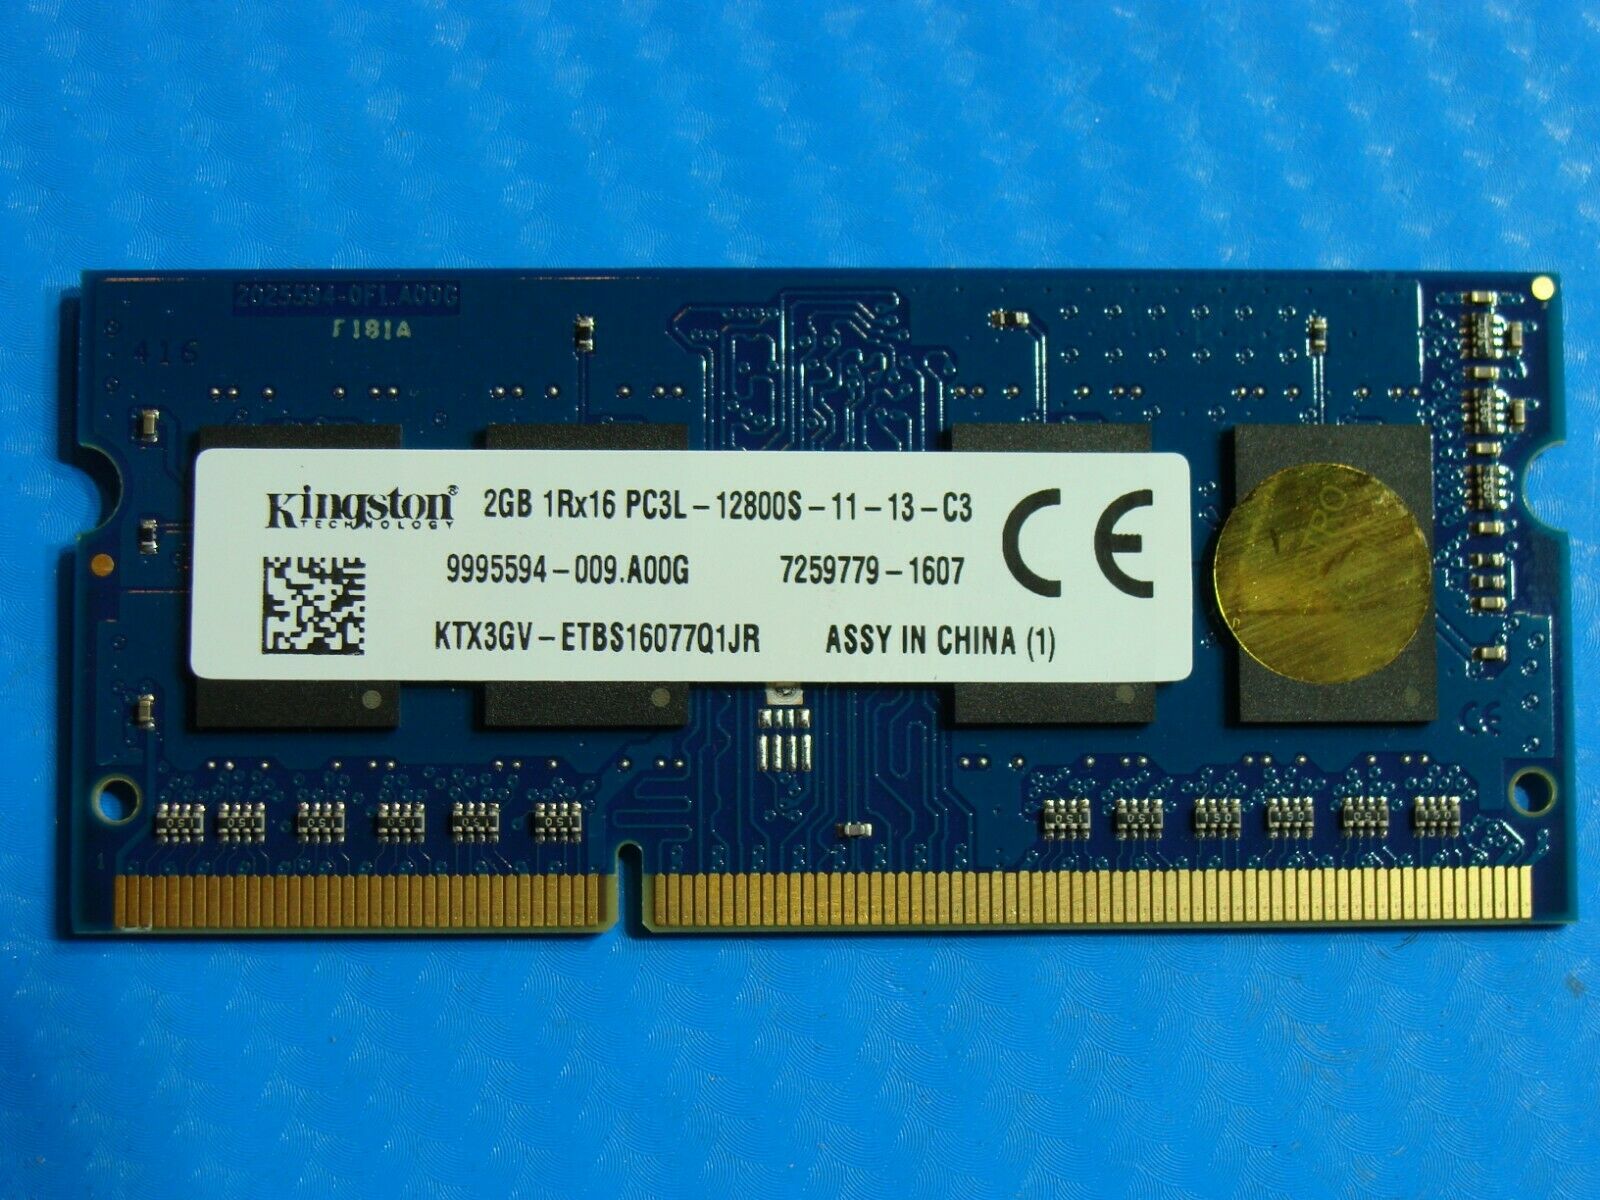 Dell 5555 Laptop Kingston 2GB Memory PC3L-12800S-11-13-C3 9995594-009.A00G - Laptop Parts - Buy Authentic Computer Parts - Top Seller Ebay